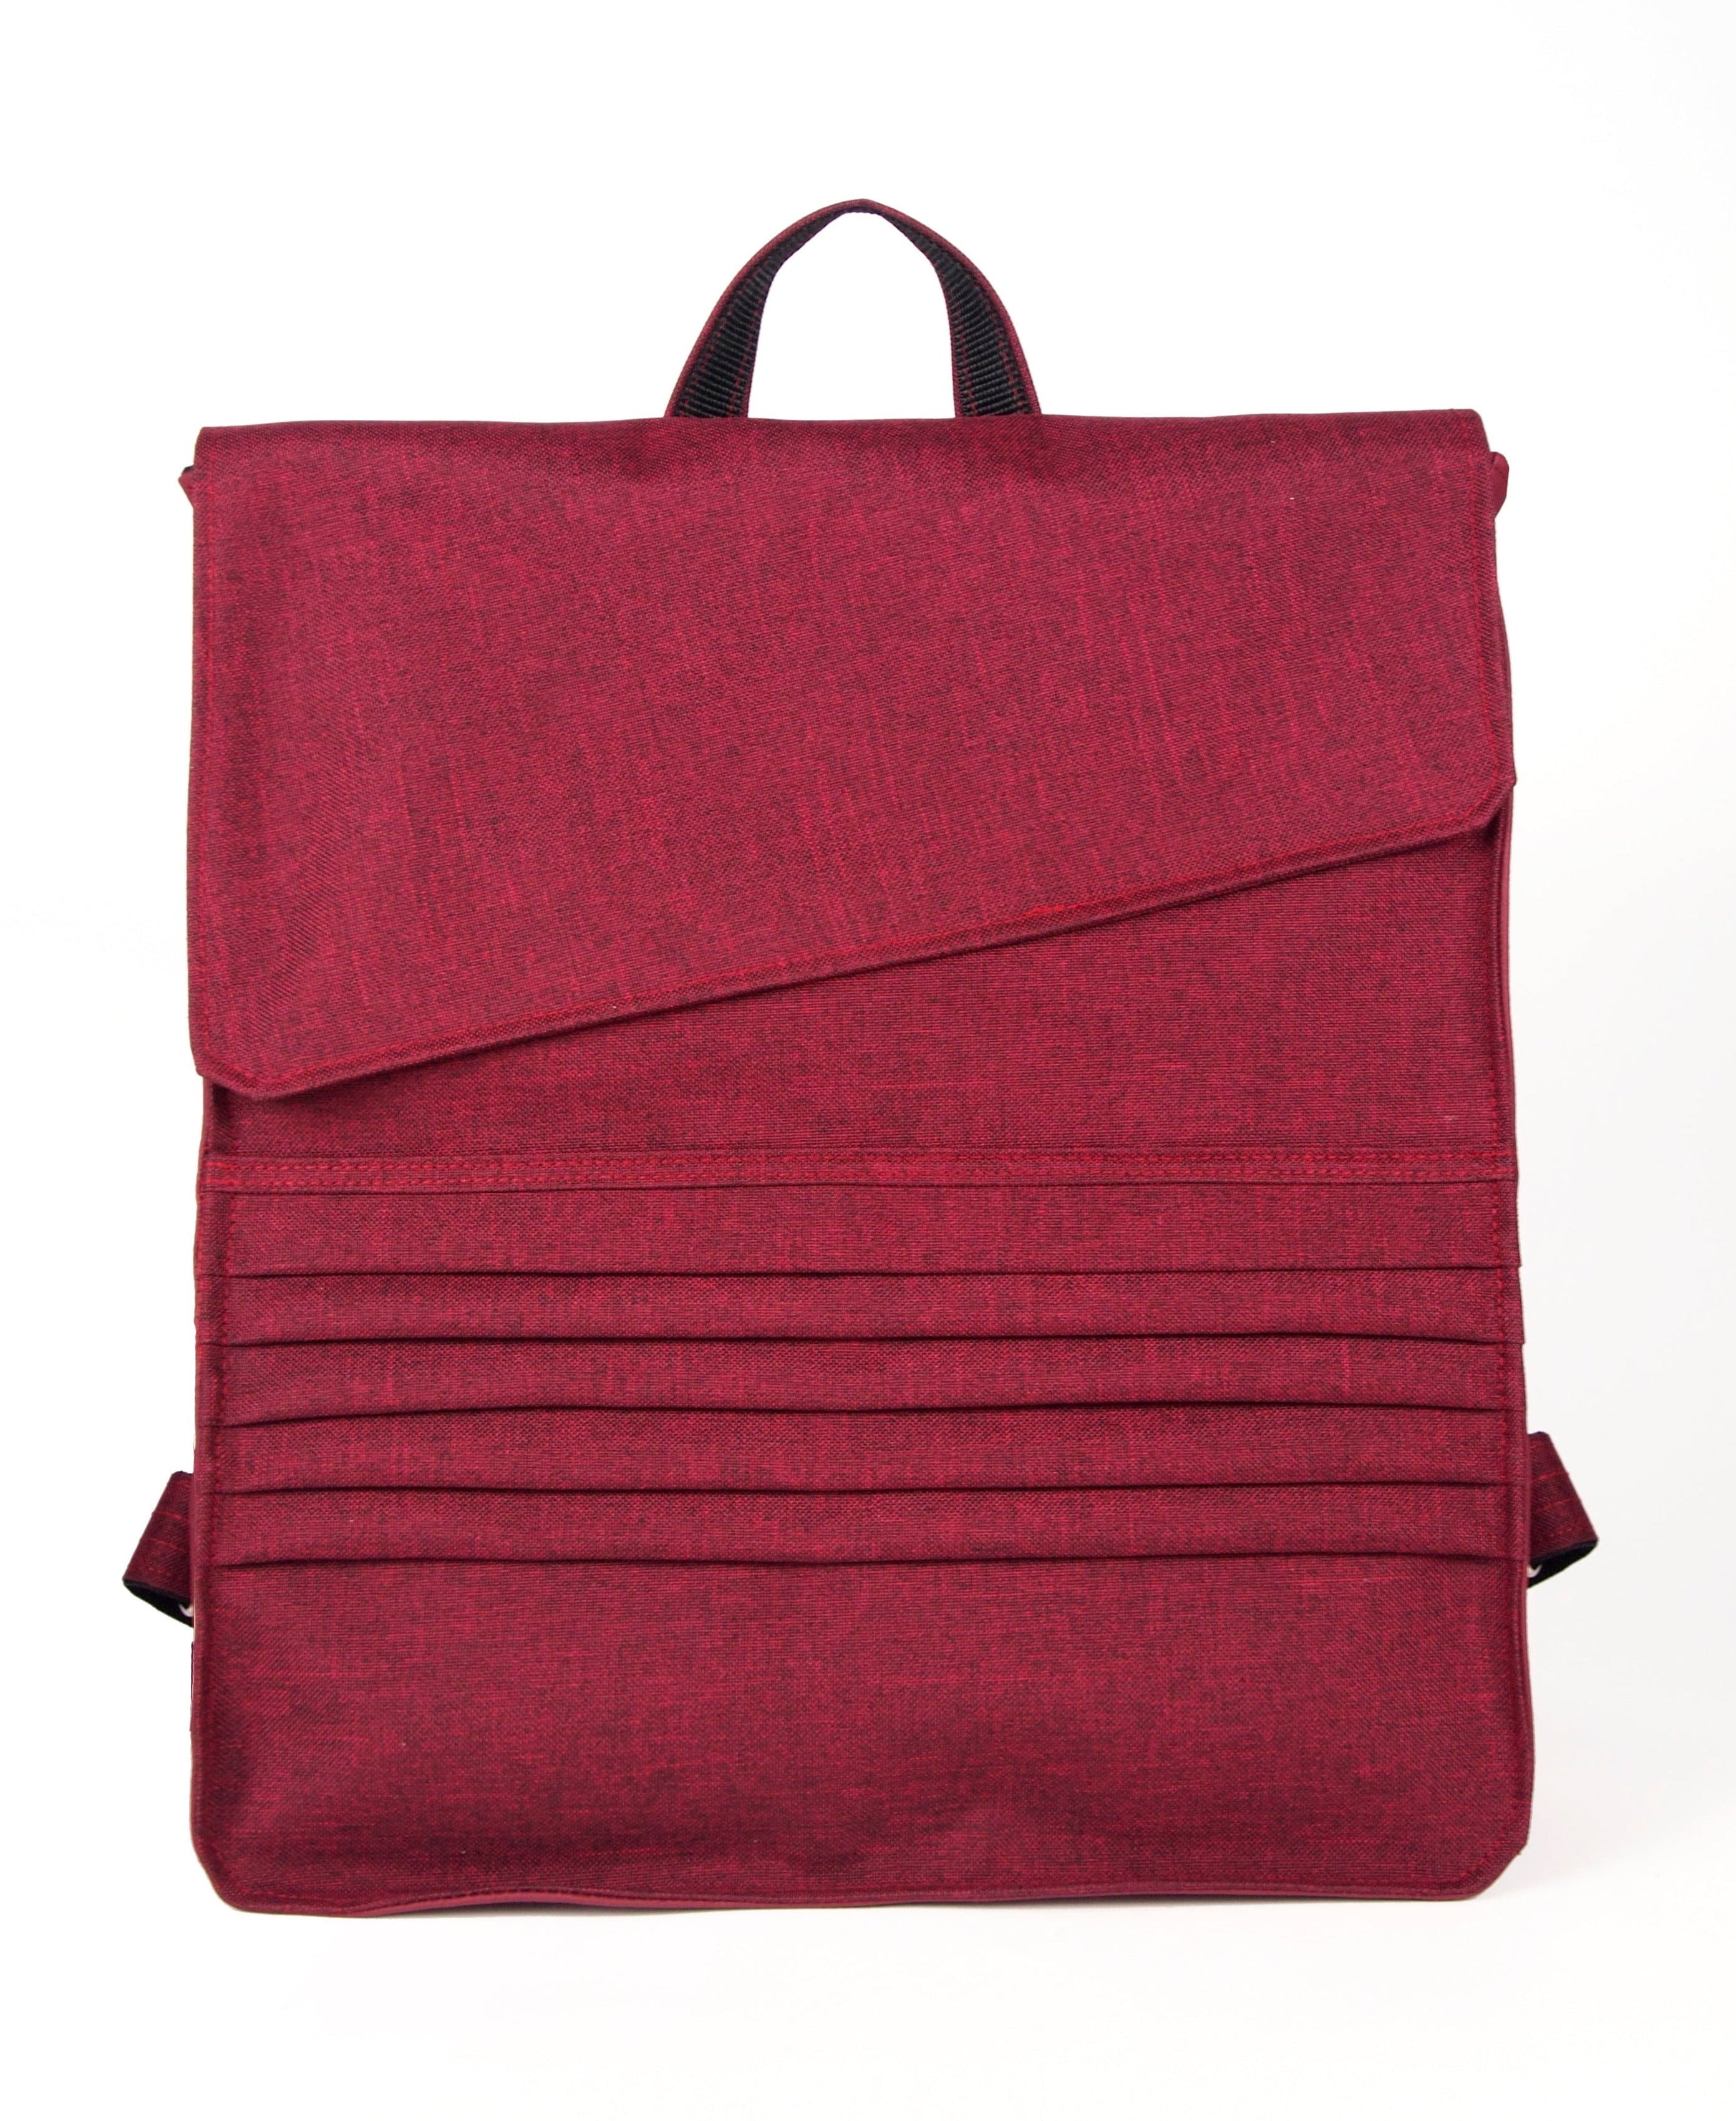 Bardo work backpack - red - Premium Bardo work backpack from BARDO ART WORKS - Just lvblue, dark blue, handemade, laptop backpack, unisex, vegan leather, water proof, work160! Shop now at BARDO ART WORKS